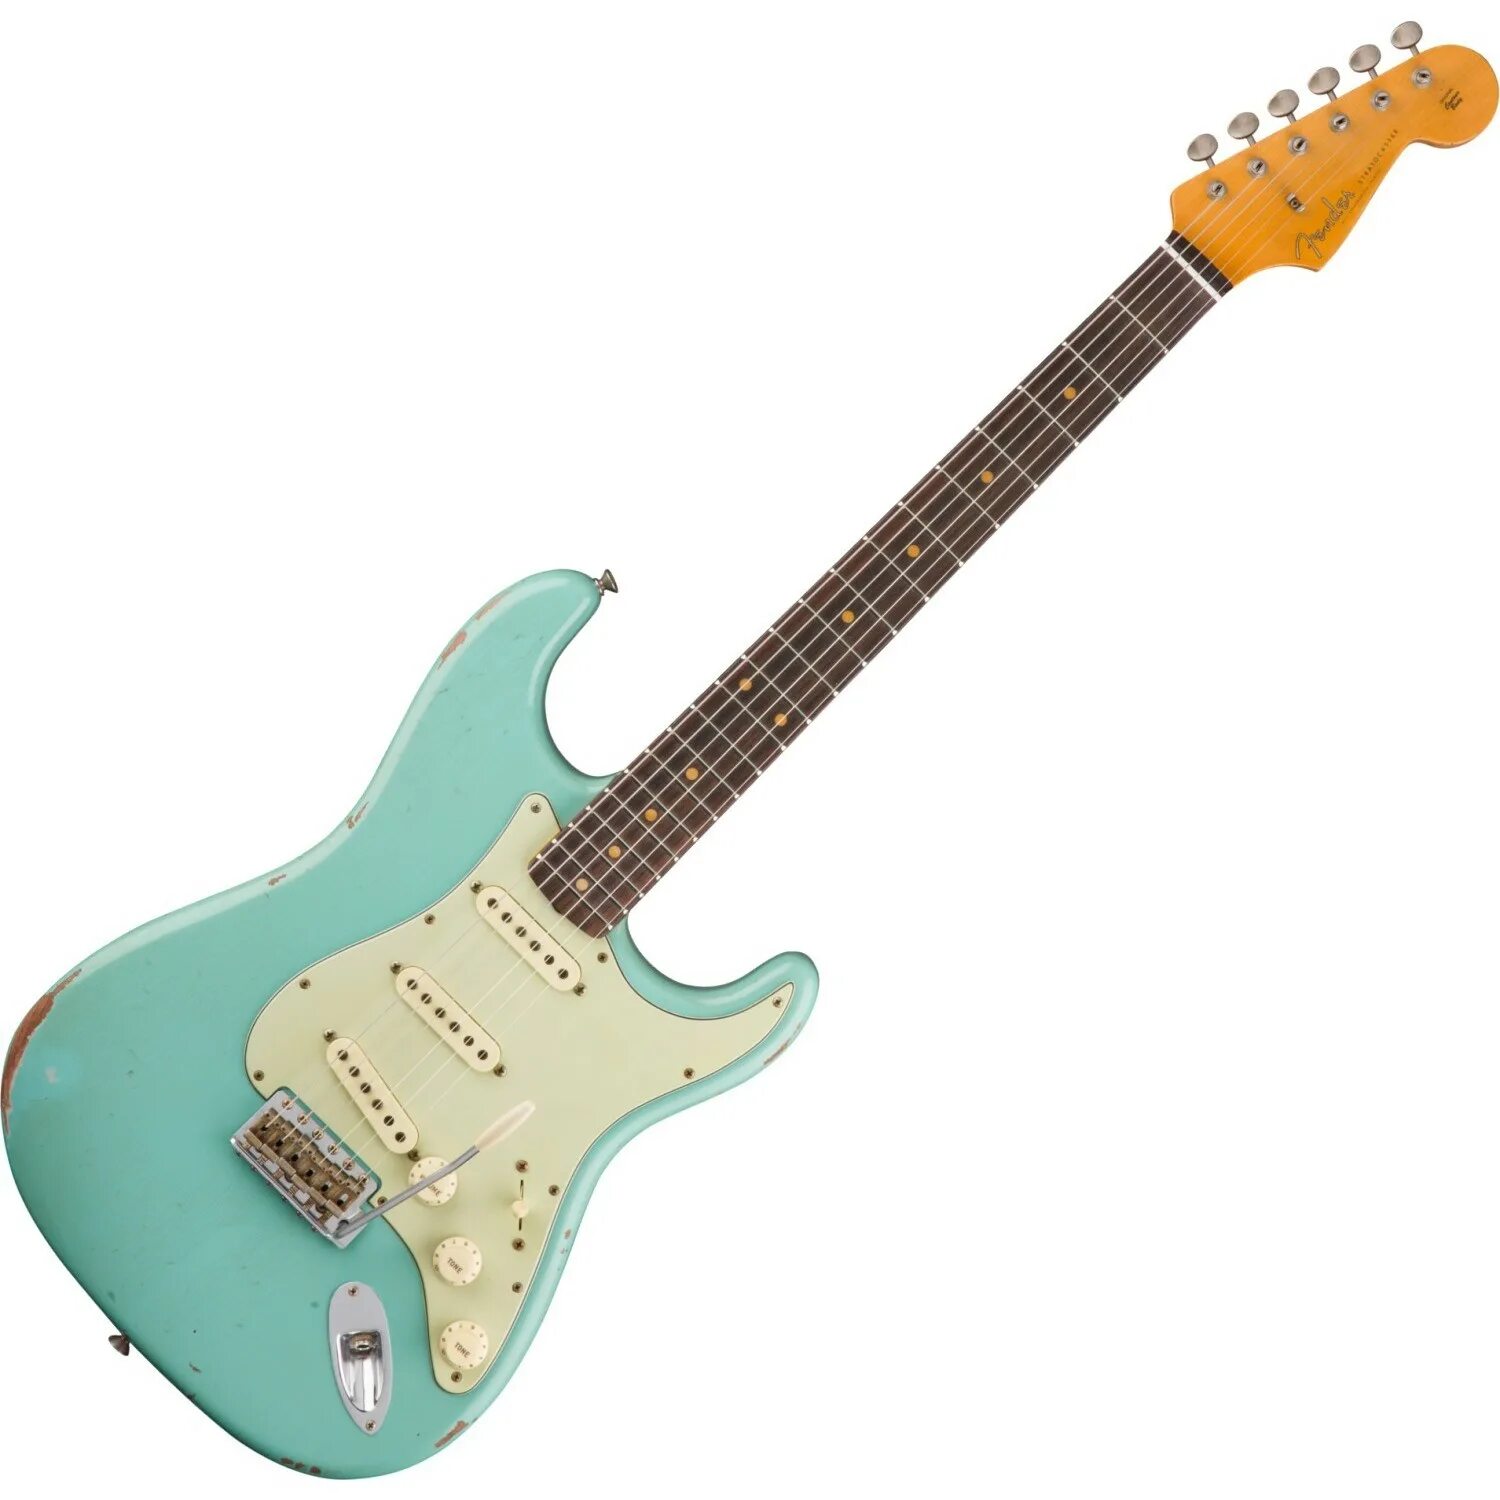 Электрогитара Fender 1960 Relic Stratocaster. Электрогитара Fender Stratocaster Green. Фендер стратокастер серф Грин HSS. Электрогитара Squier by Fender Stratocaster HSS.